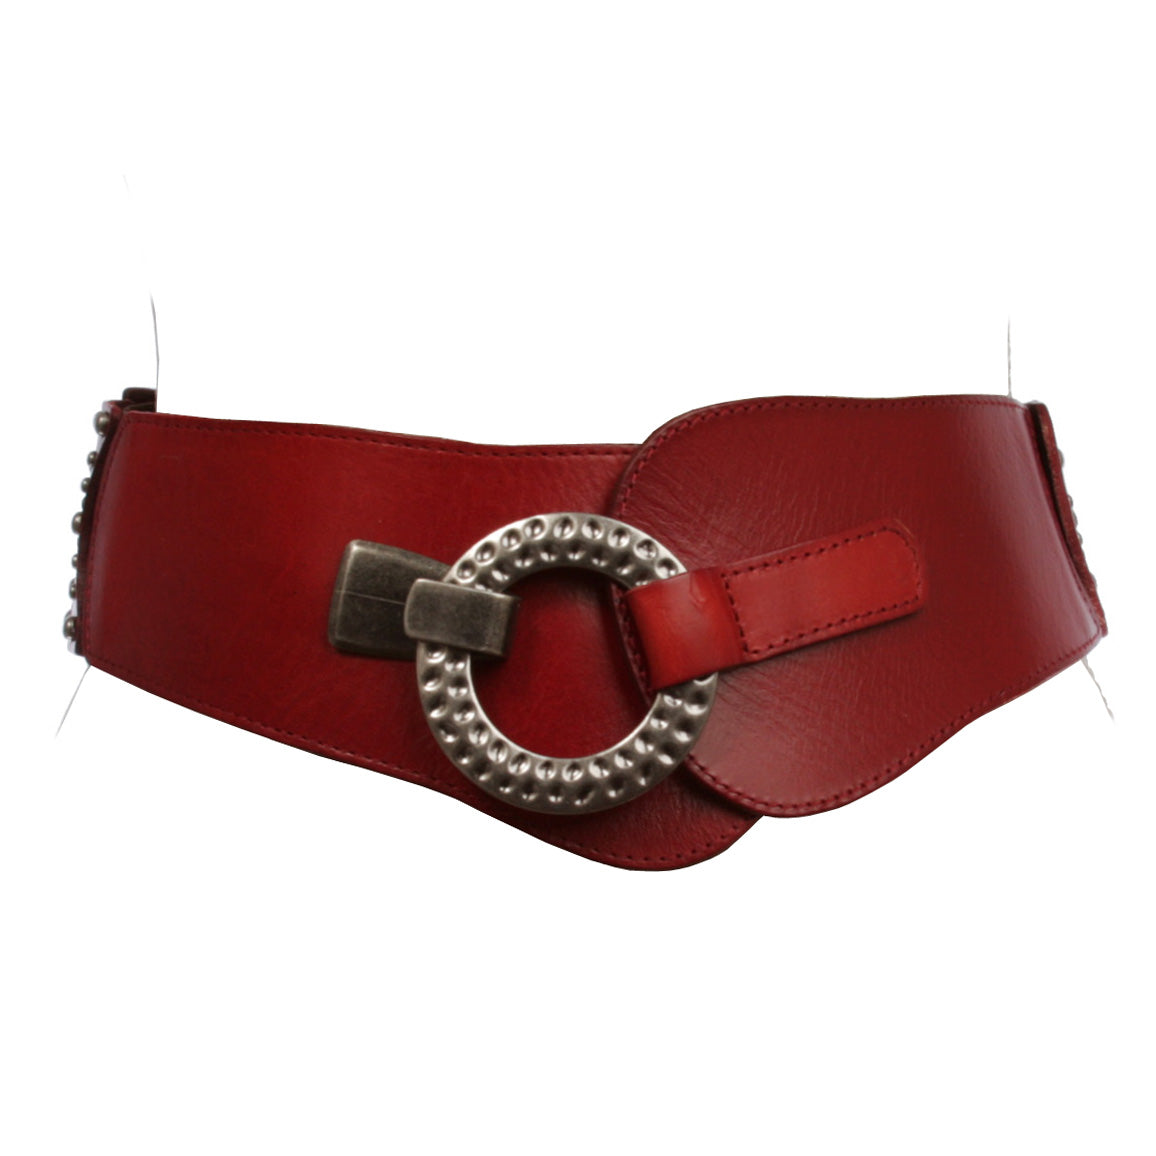 Women's 2 3/8" Wide High Waist Elastic Stretchy Studded Leather Hook Fashion Belt